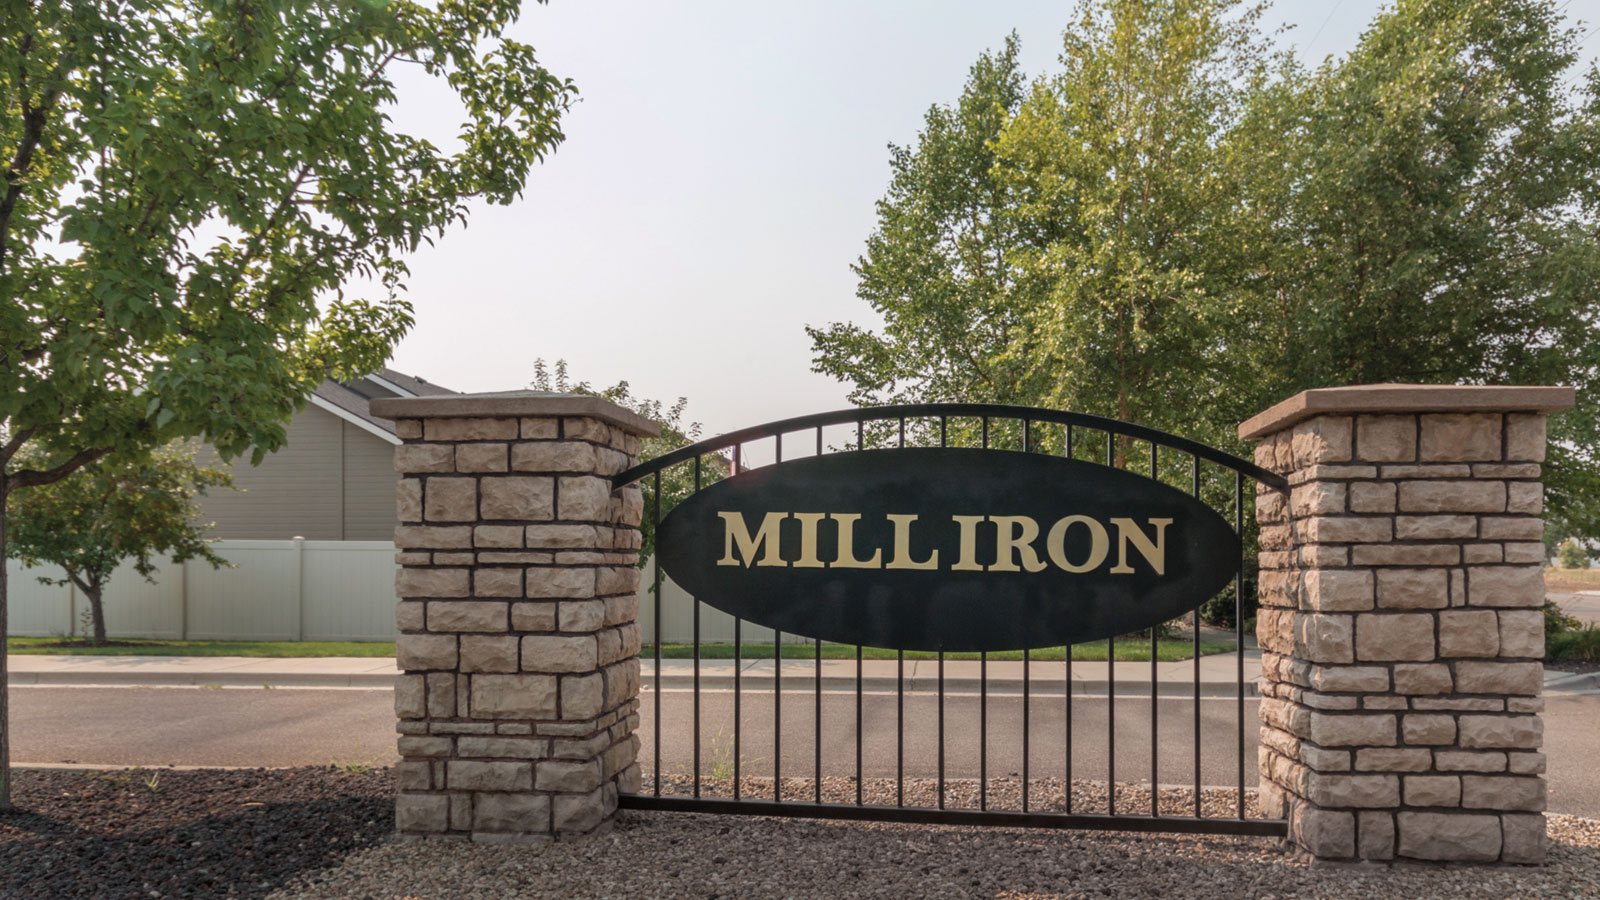 Mill Iron Subdivision Meridian Idaho